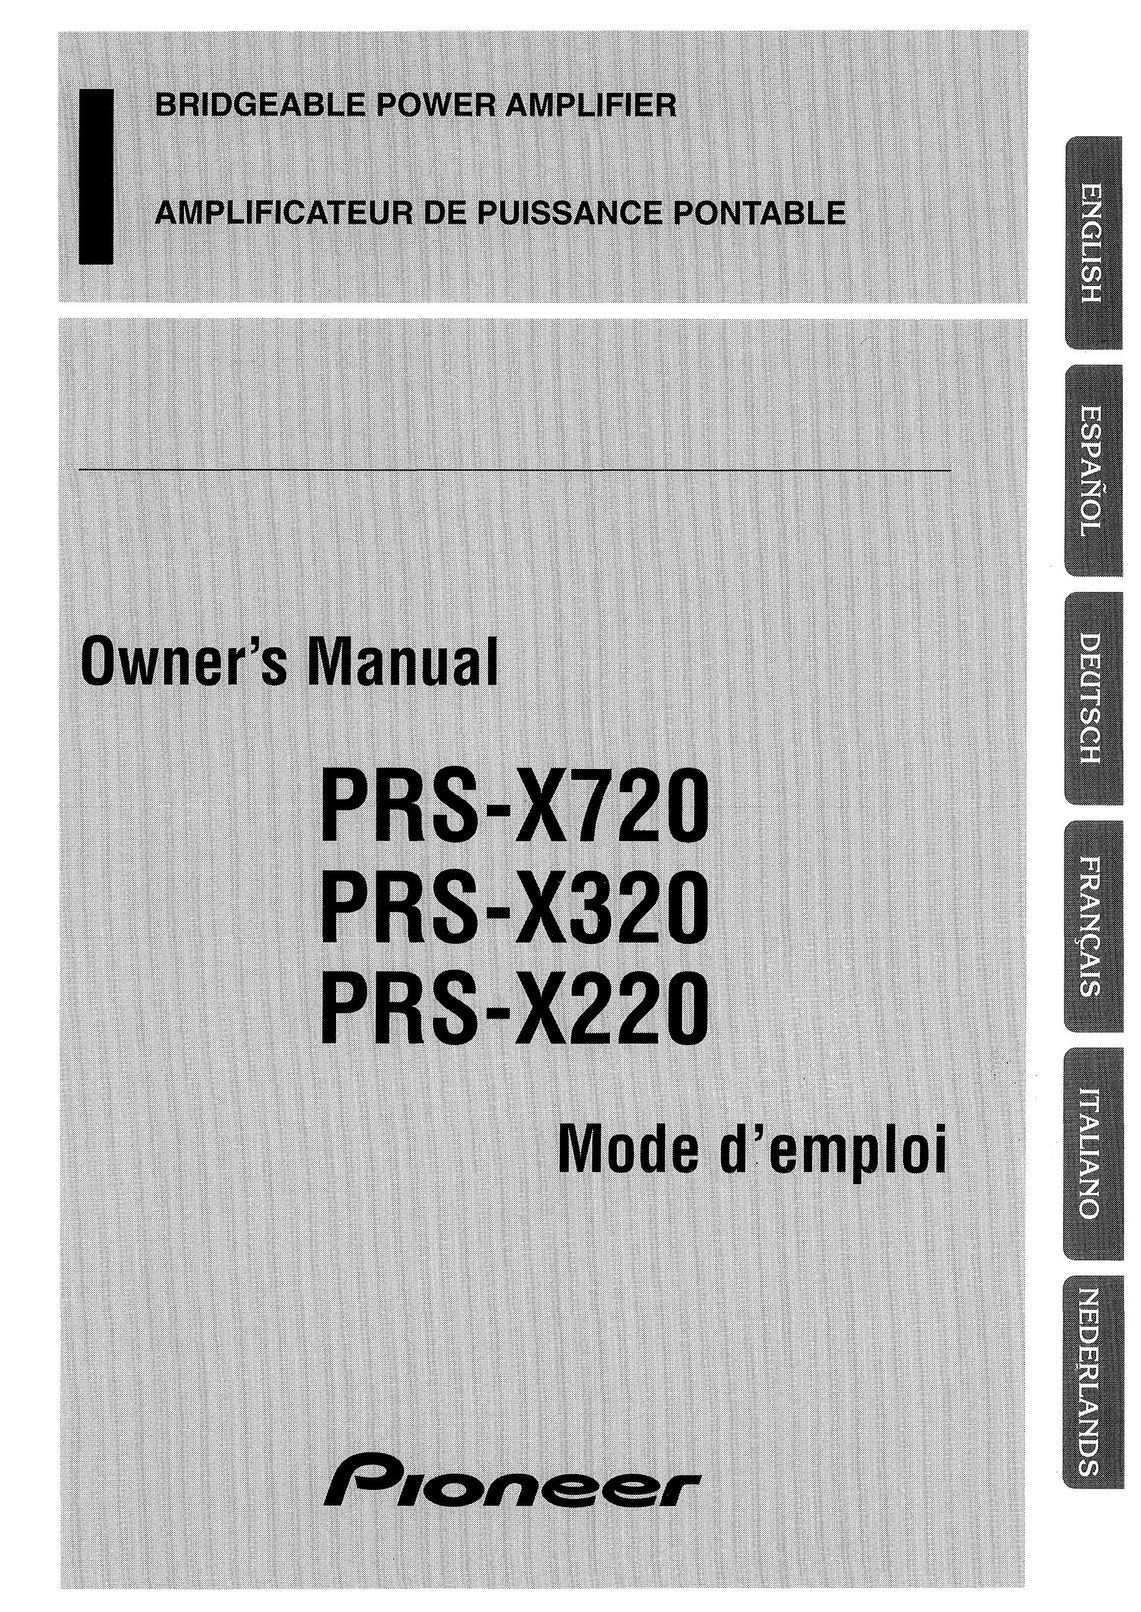 Pioneer PRS-X220 Stereo Amplifier User Manual